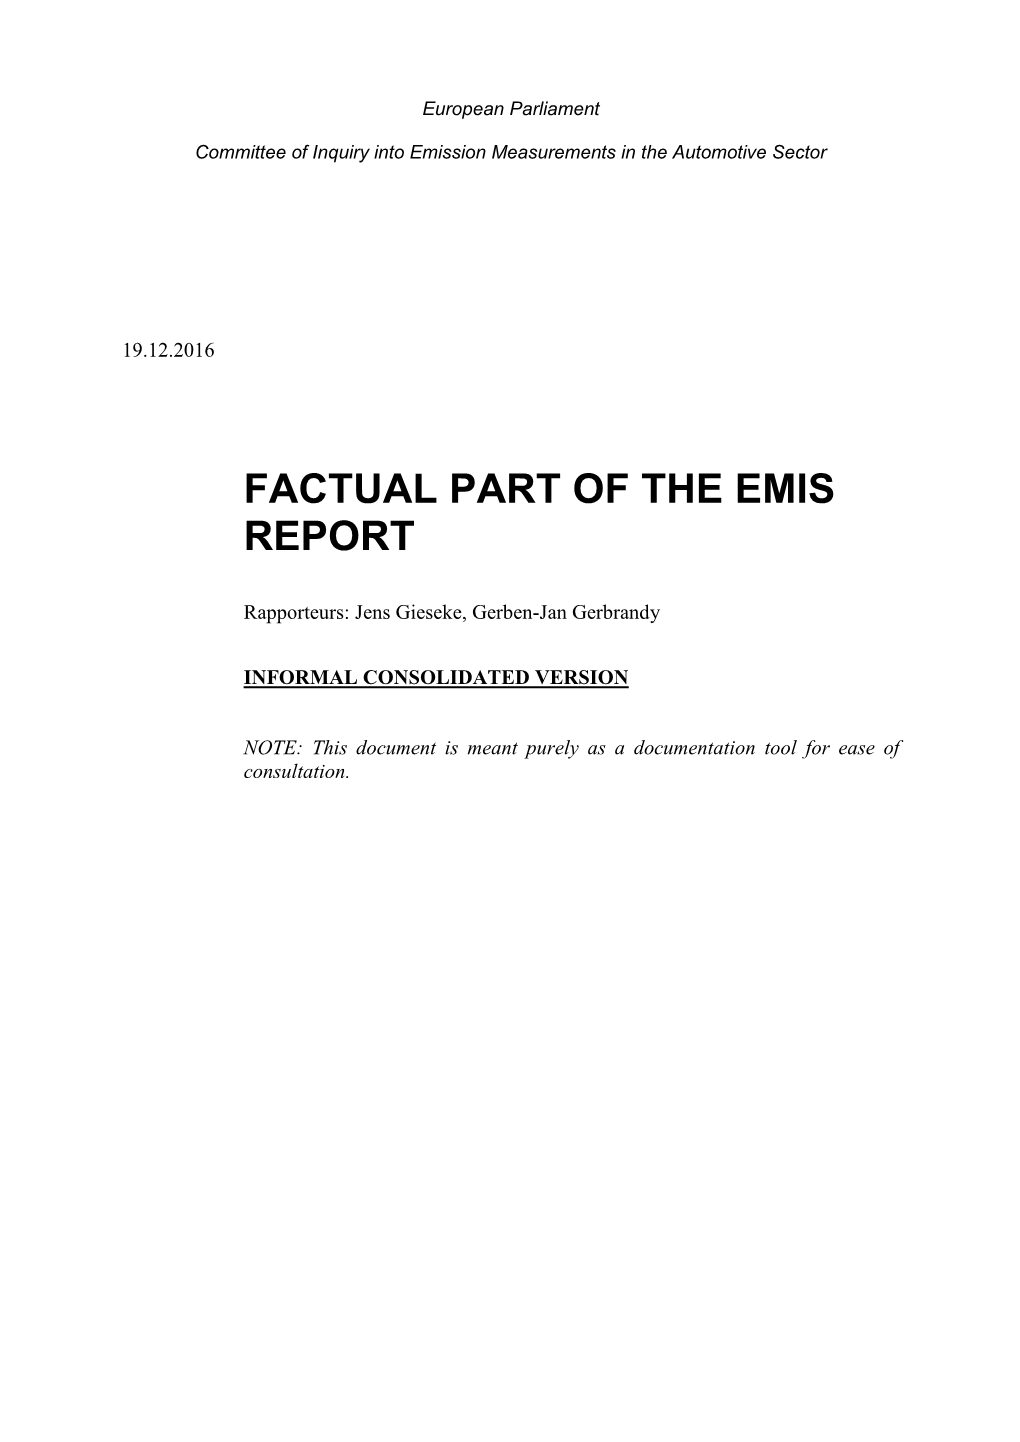 Informal Consolidated Factual Part of EMIS Report